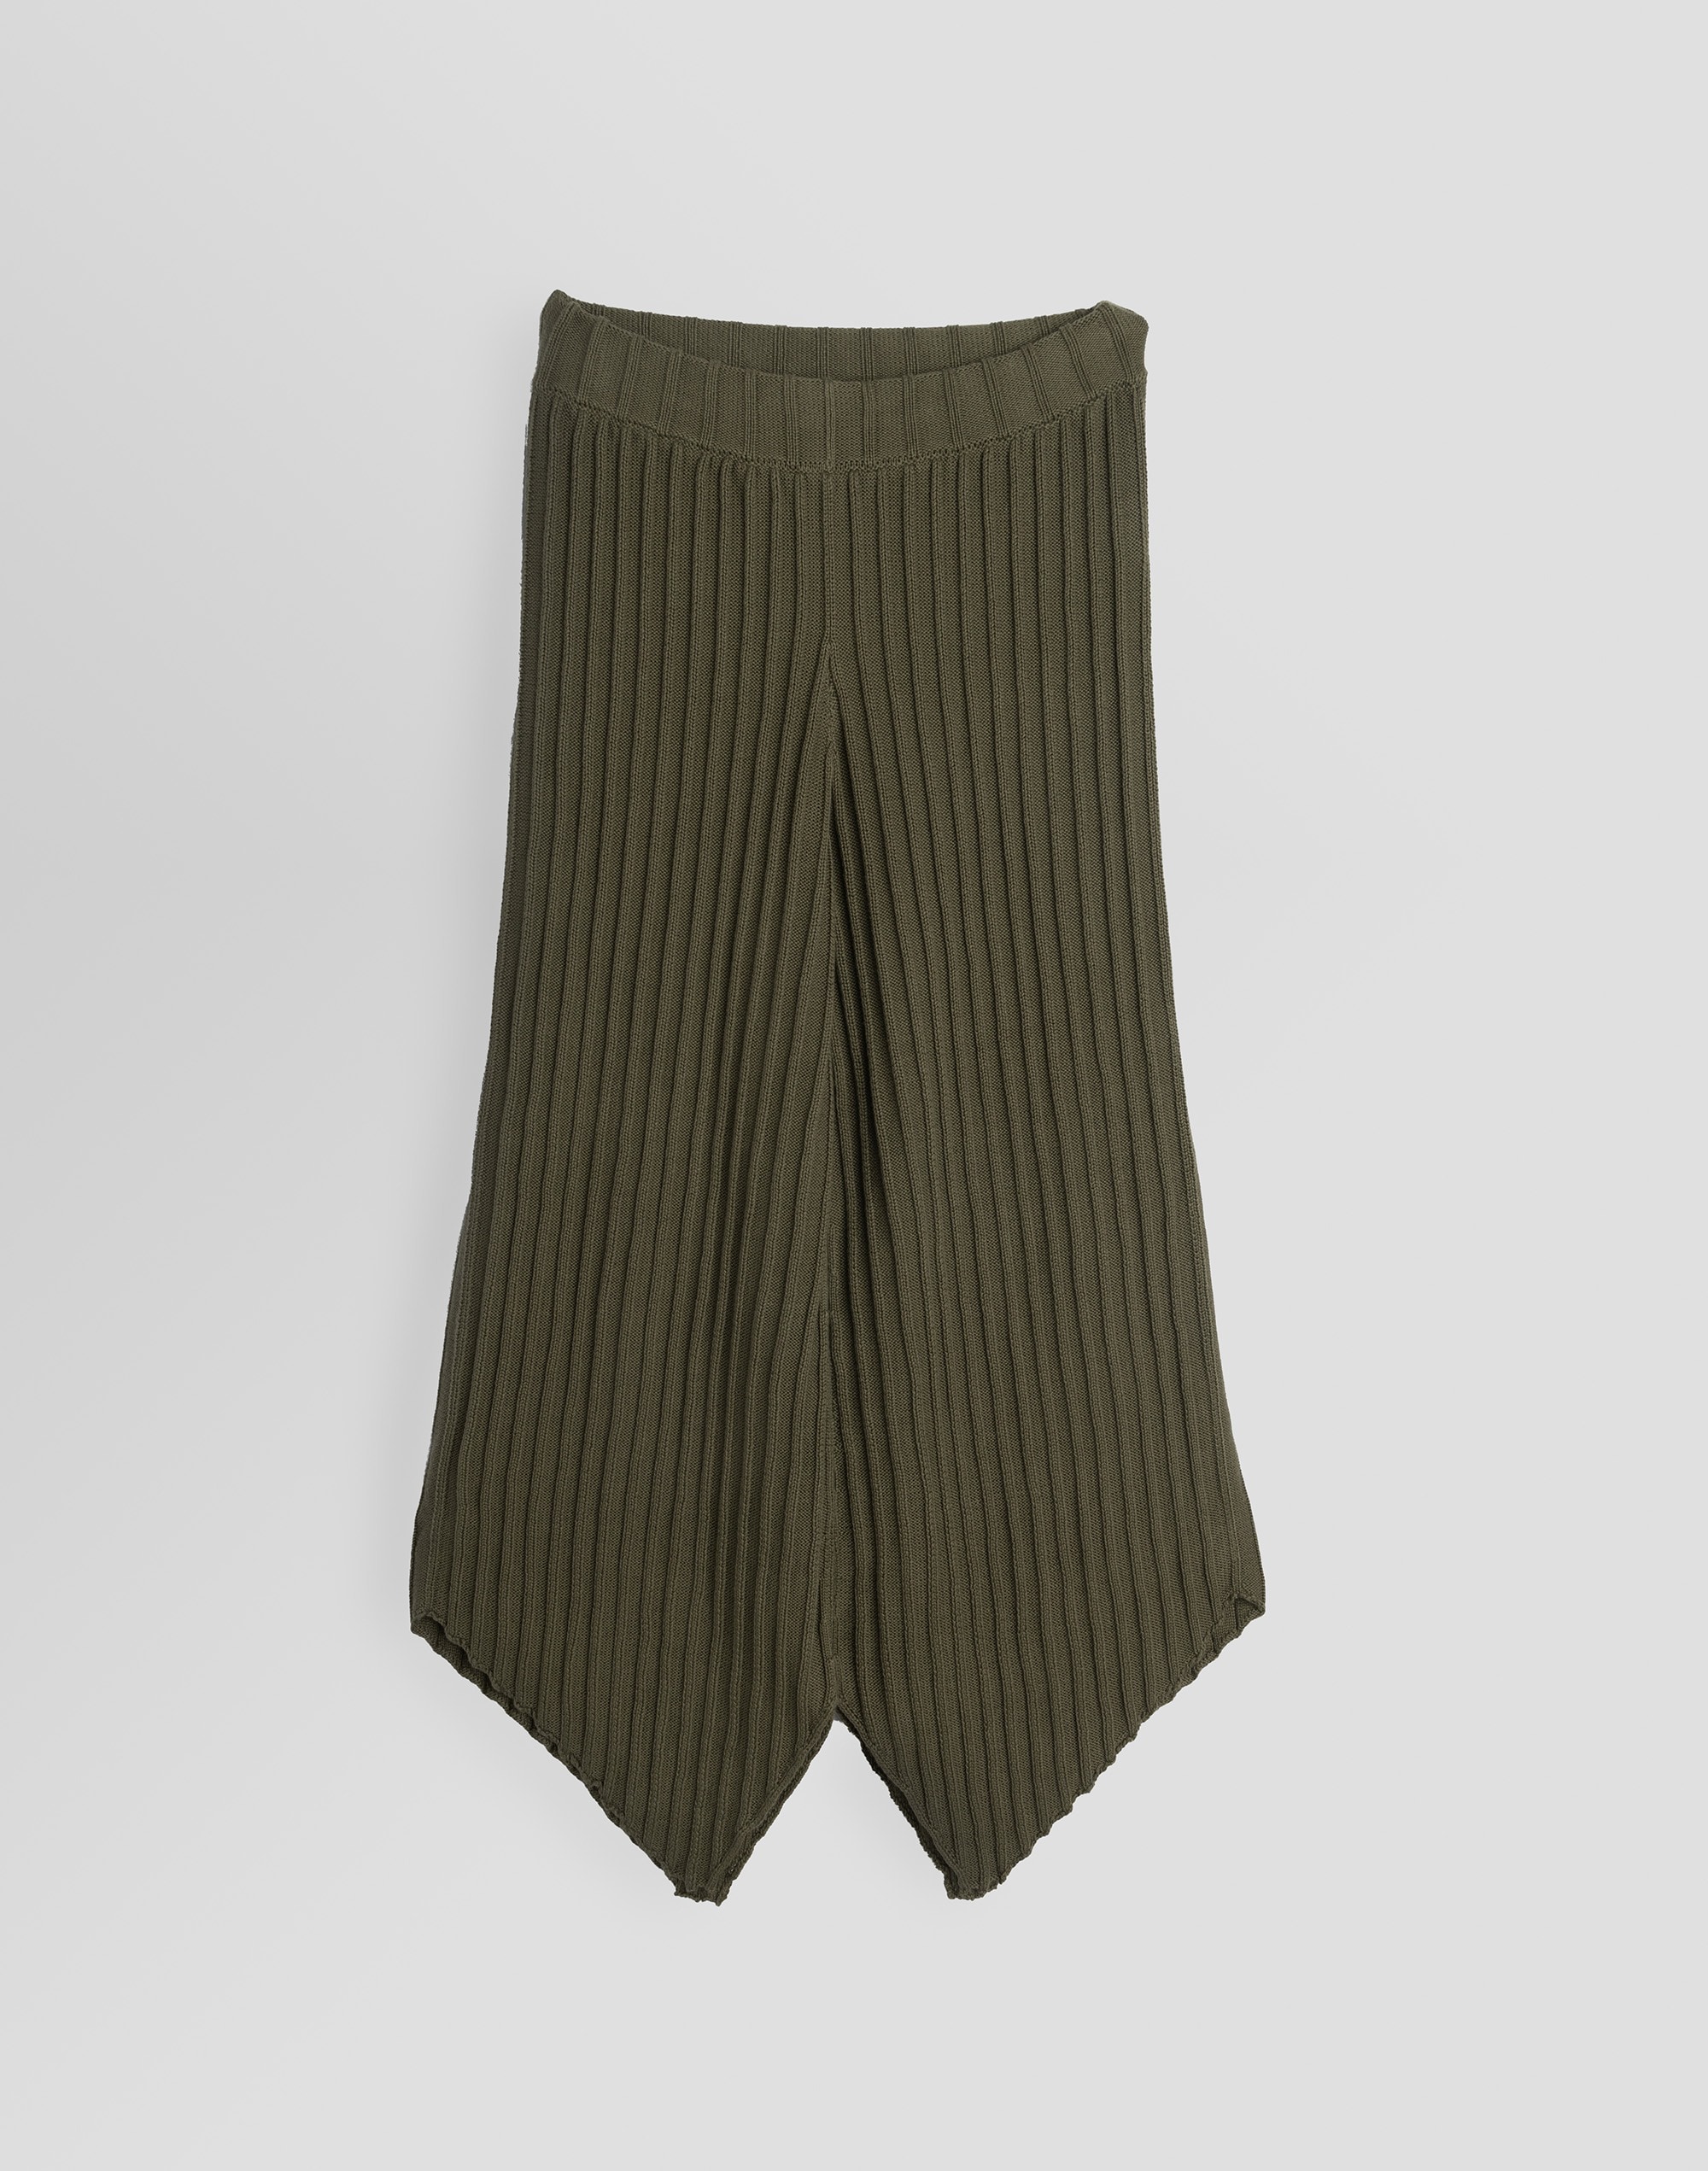 SOLUNA COLLECTIVE Olive Asymmetrical Knit Pants